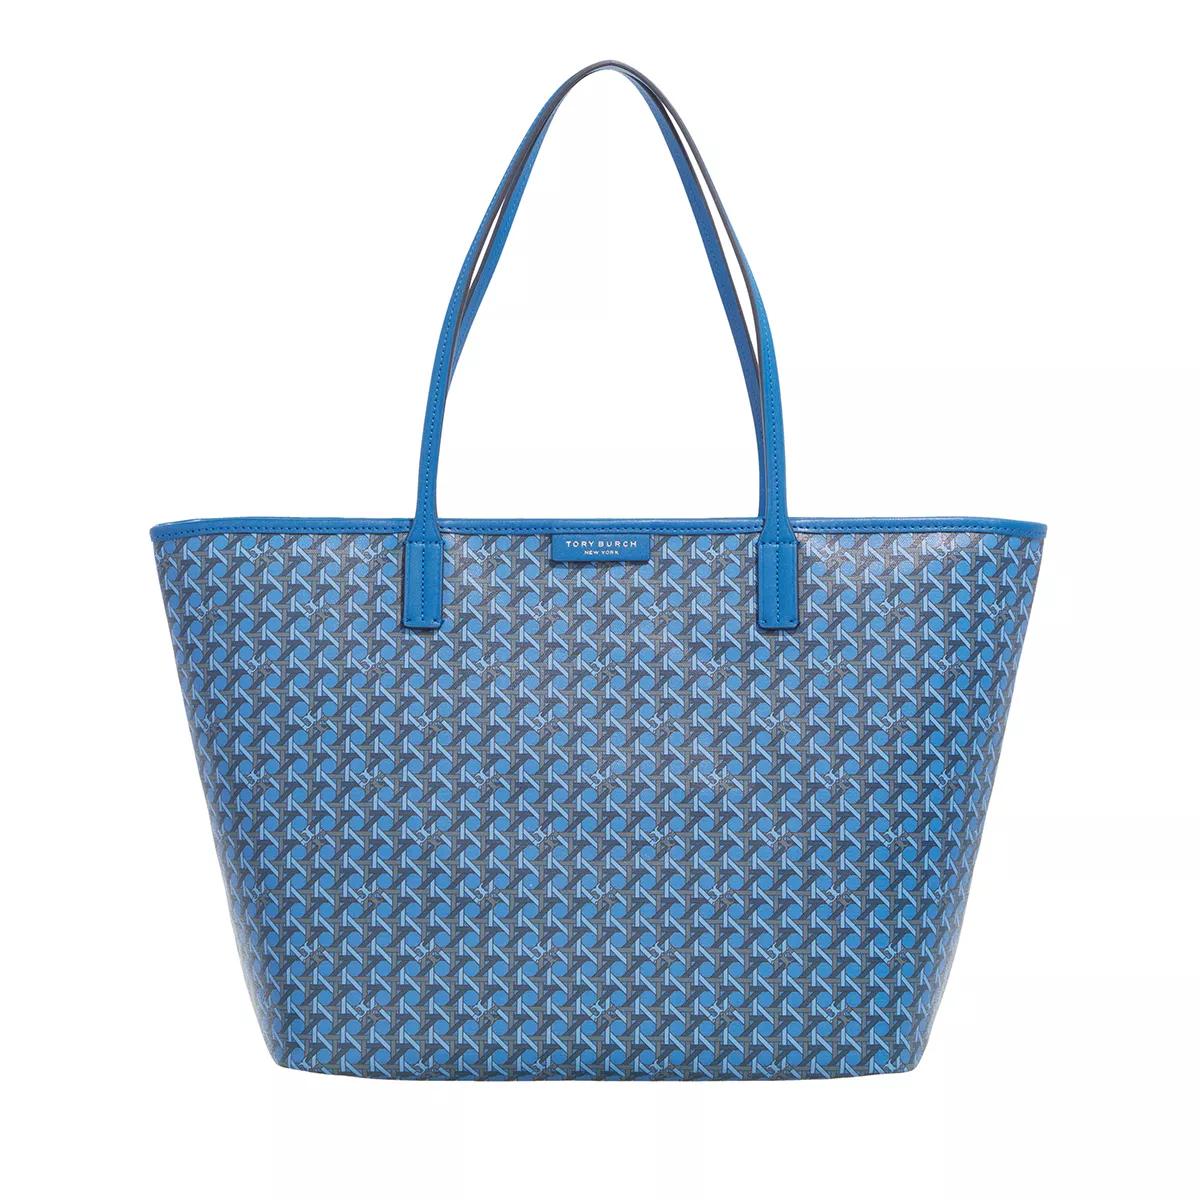 Tory Burch Ever-Ready Tote Mediterranean Blue | Shopper